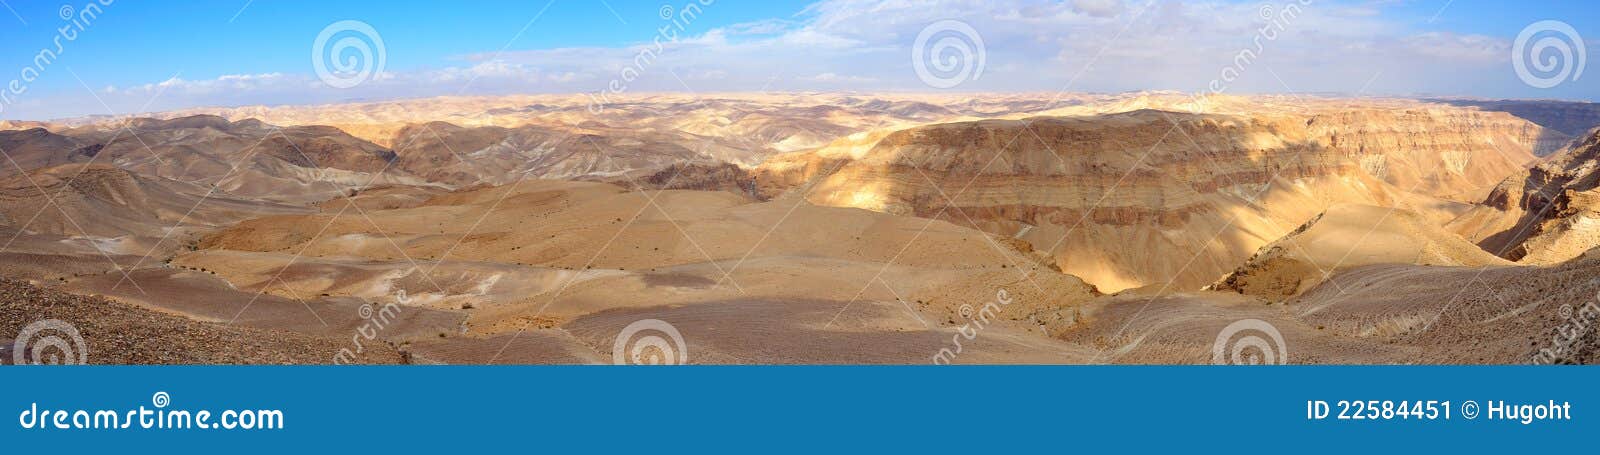 yehuda desert panorama, israel